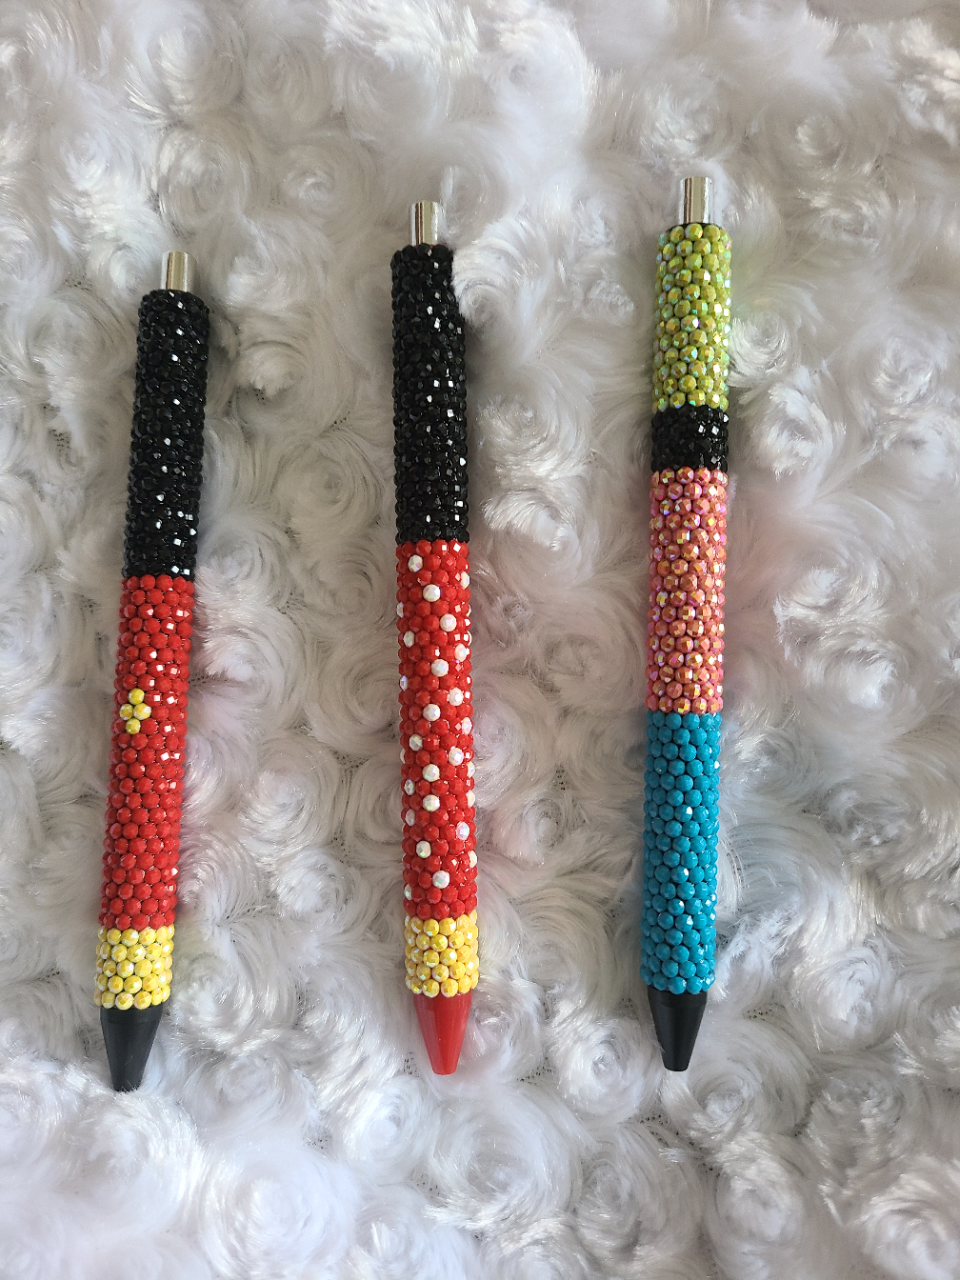 Mickey and Friends Inspired Rhinestone Pen Design – The Craft Divas